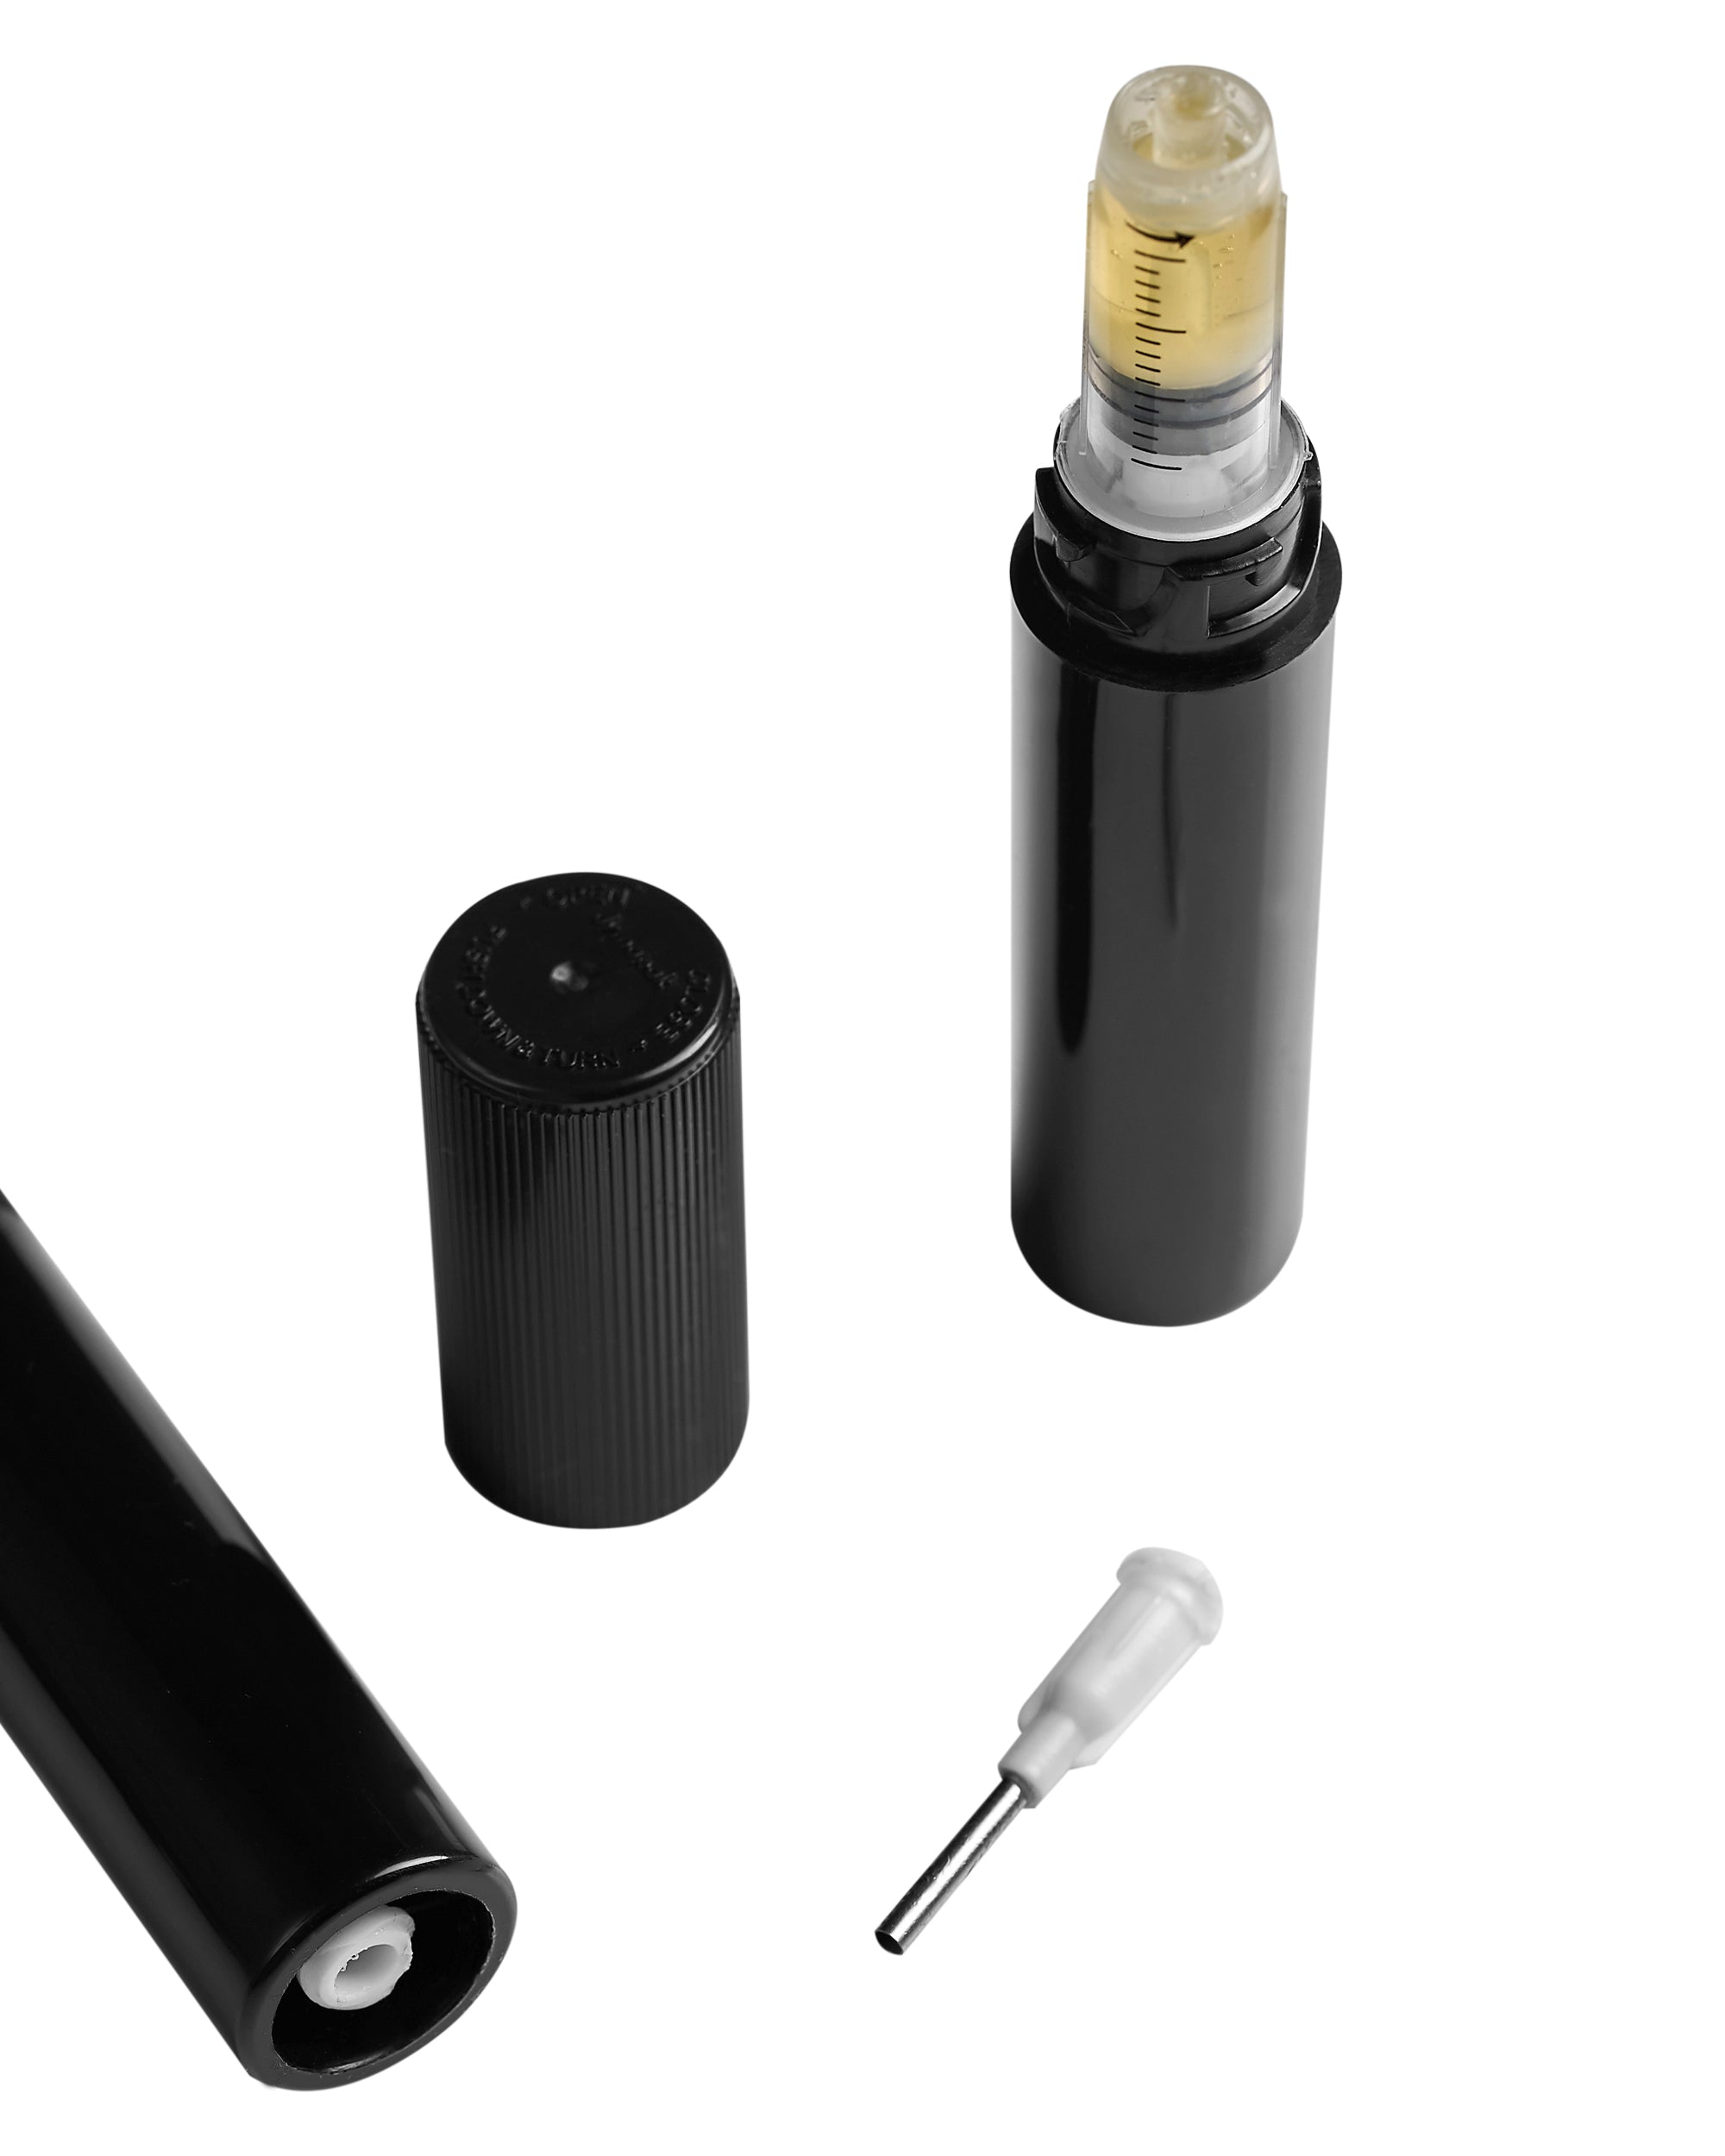 Child Resistant & Luer Lock | DymaPak Twistspenser Black Plastic Dab Applicator Syringes | 1mL - 0.33mL Increments - 4